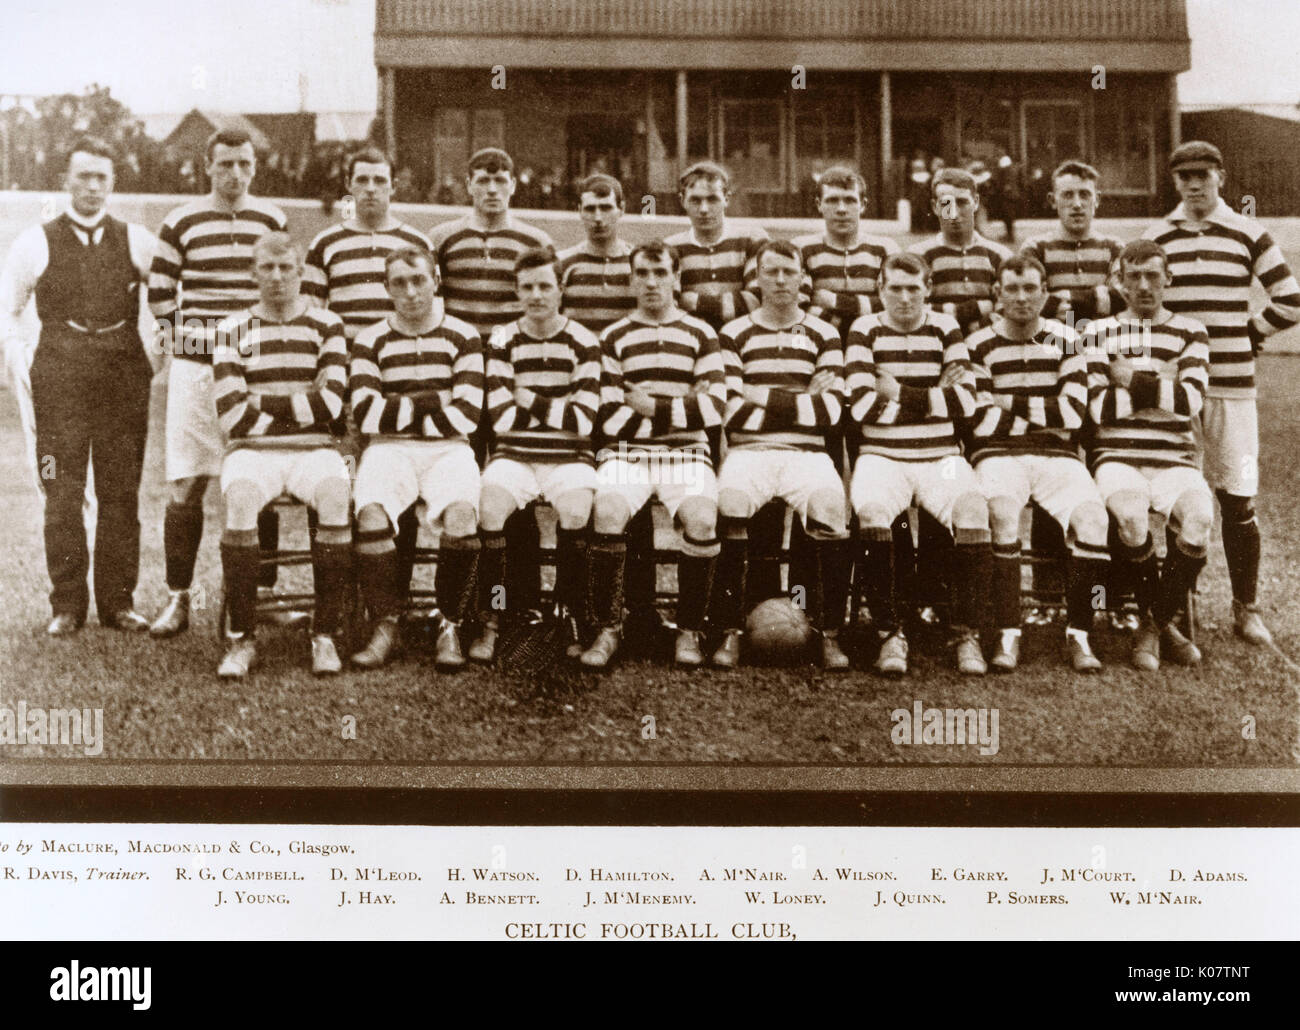 Group photo, Celtic Football Club 1905-1906: Davis (Trainer), Campbell, M'Leod, Watson, Hamilton, M'Nair, Wilson, Garry, M'Court, Adams, Young, Hay, Bennett, M'Menemy, Loney, Quinn, Somers, M'Nair.     Date: 1905-1906 Stock Photo